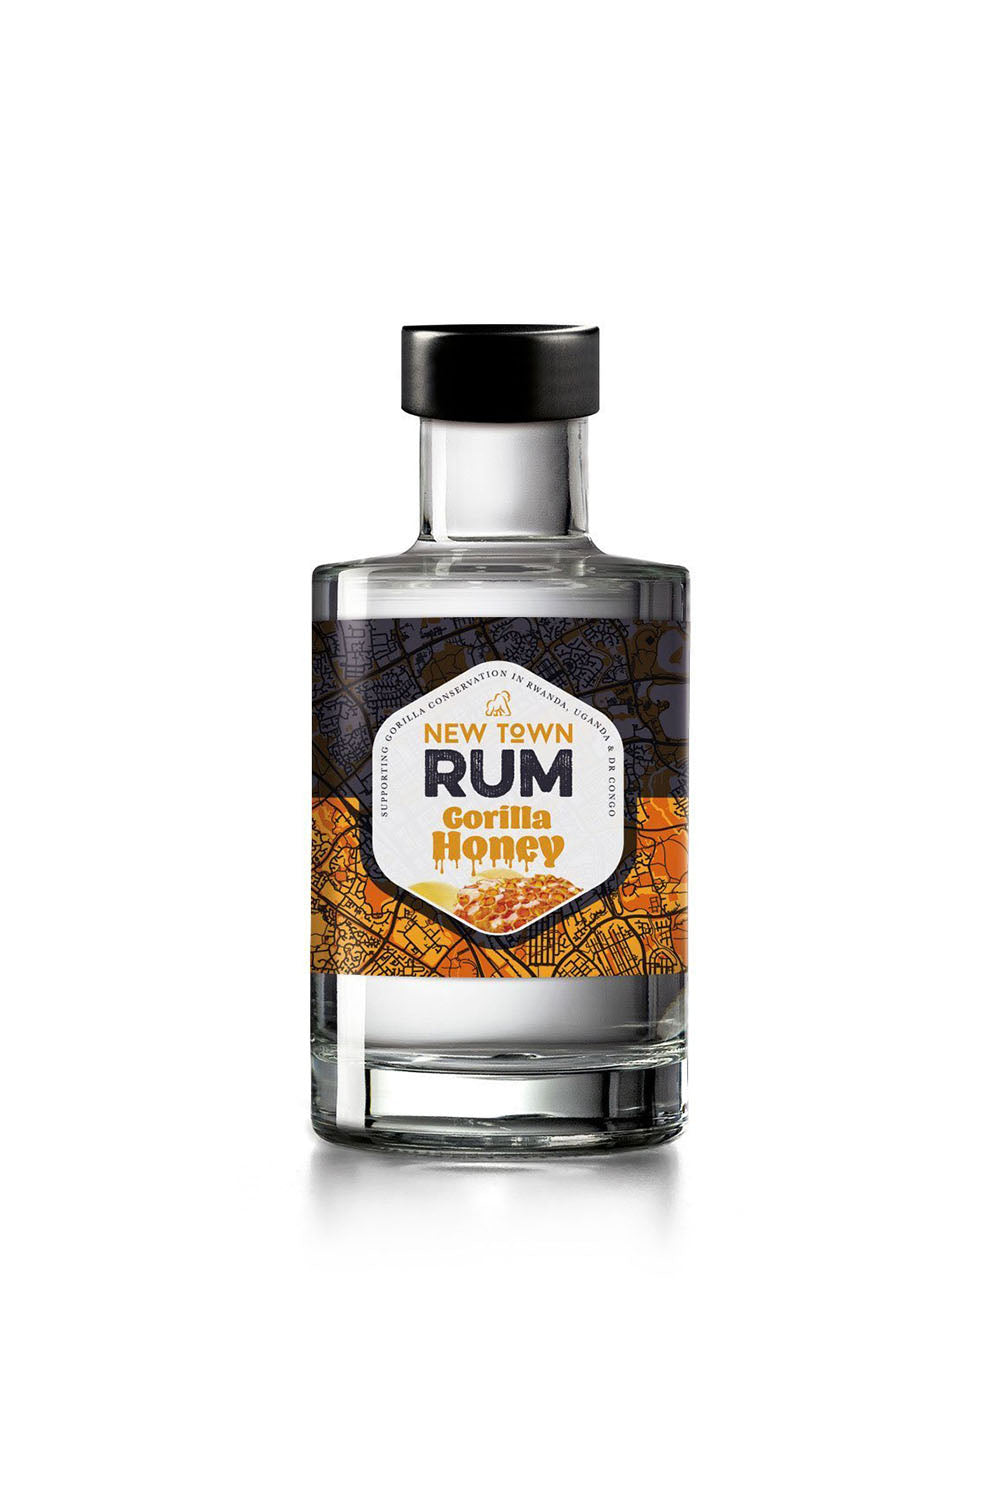 New Town Rum, Gorilla Honey